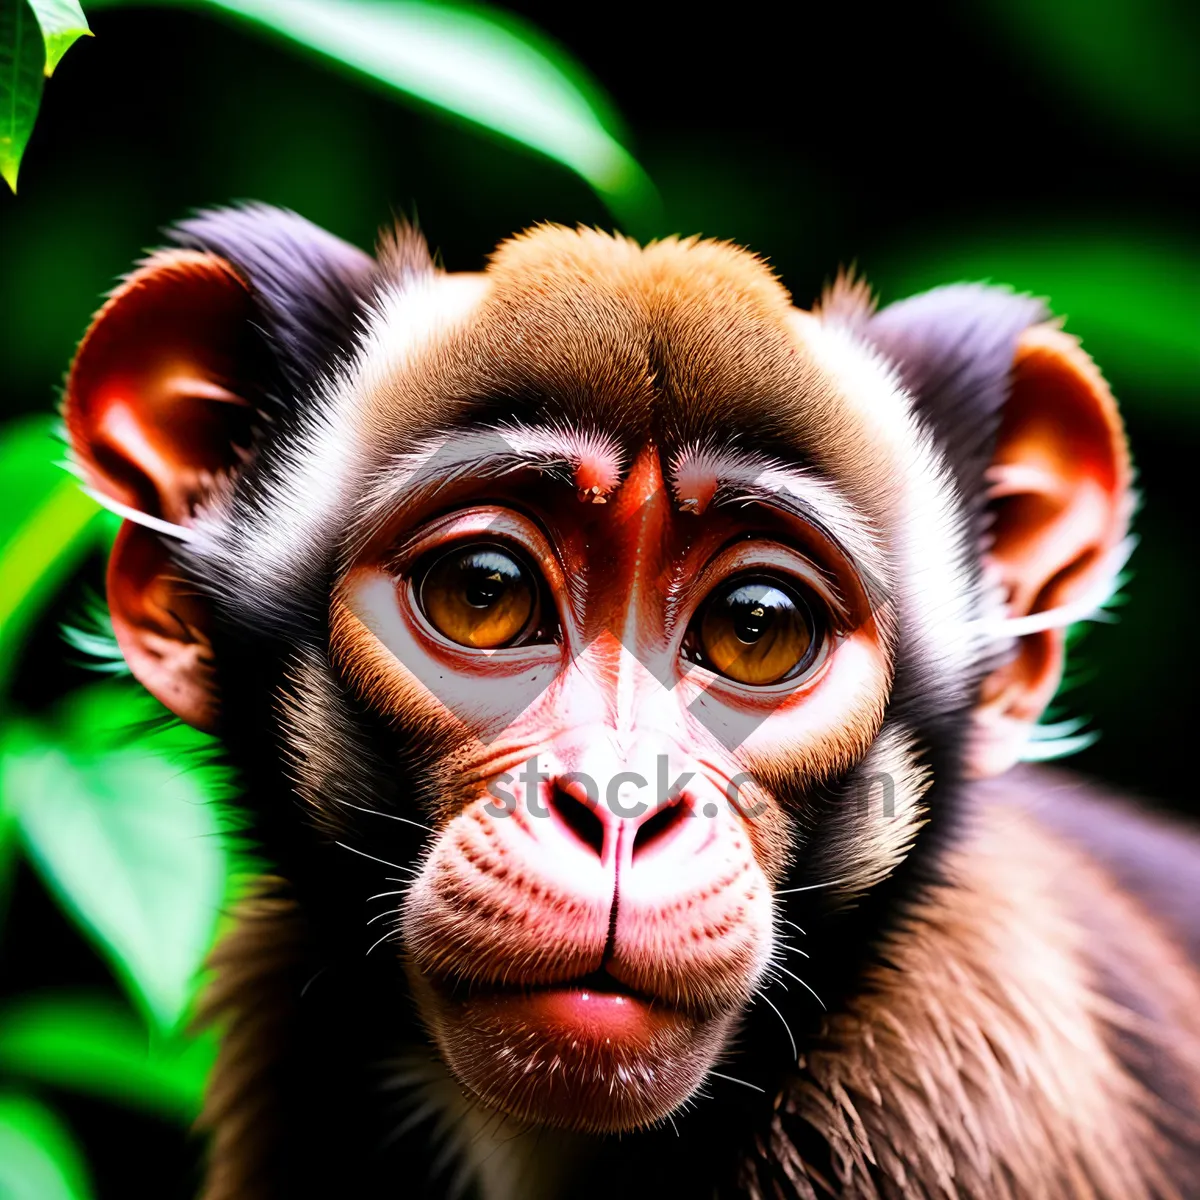 Picture of Playful Ape in Jungle Habitat